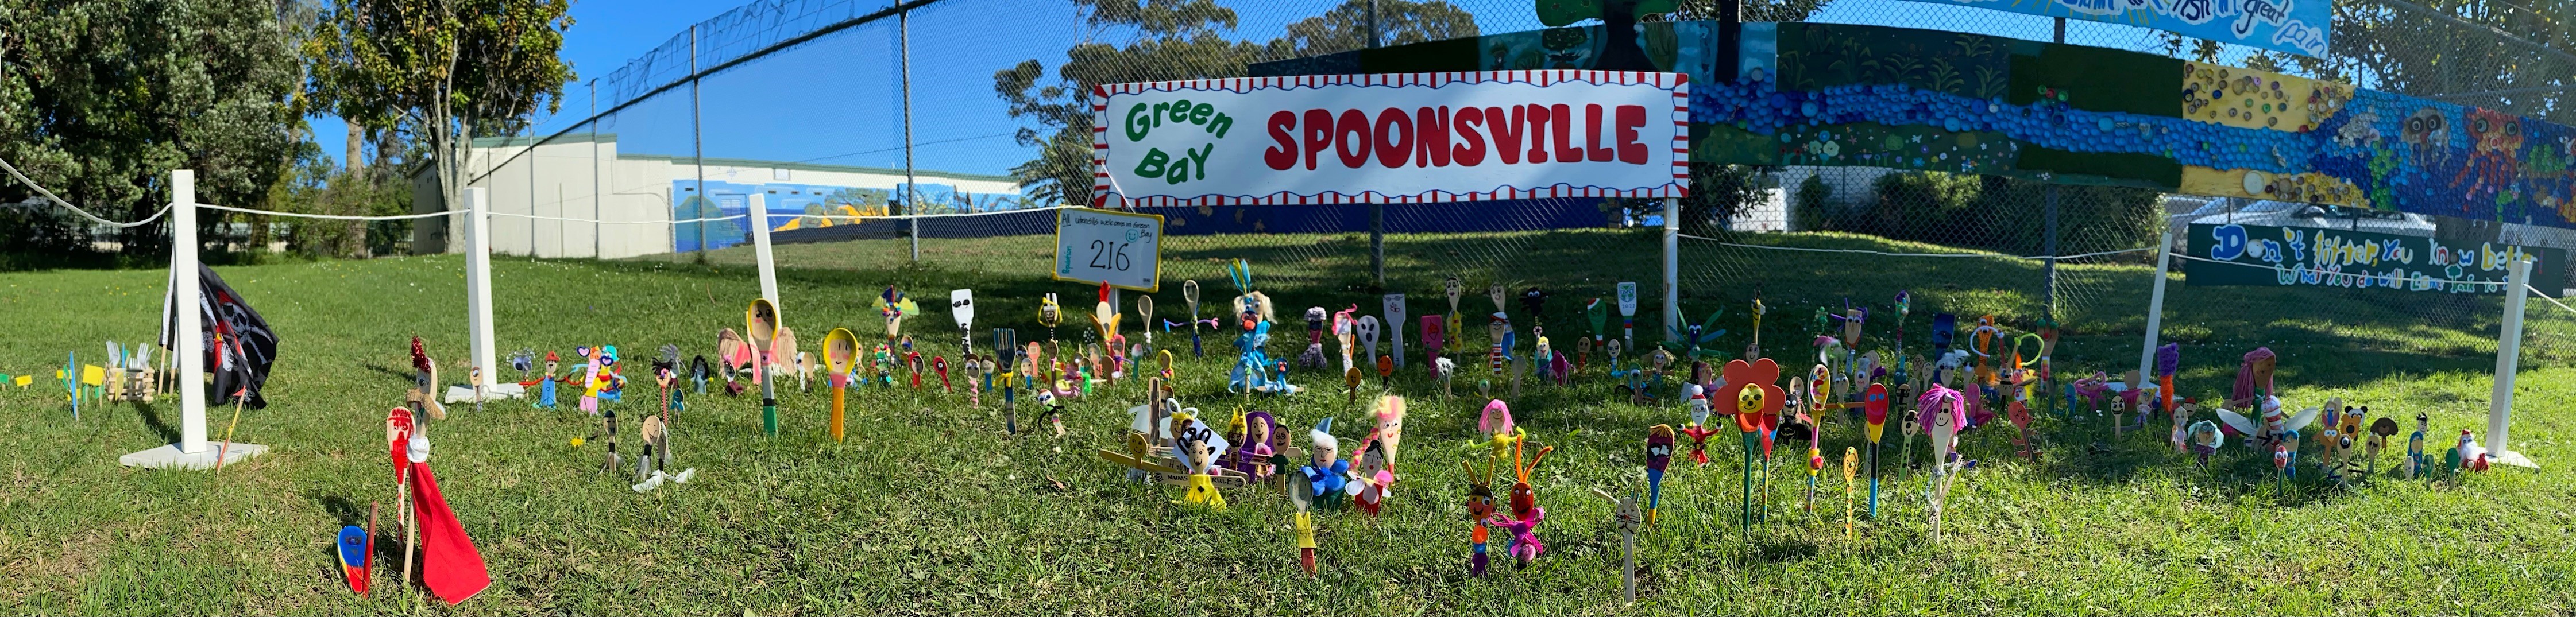 spoonsville1